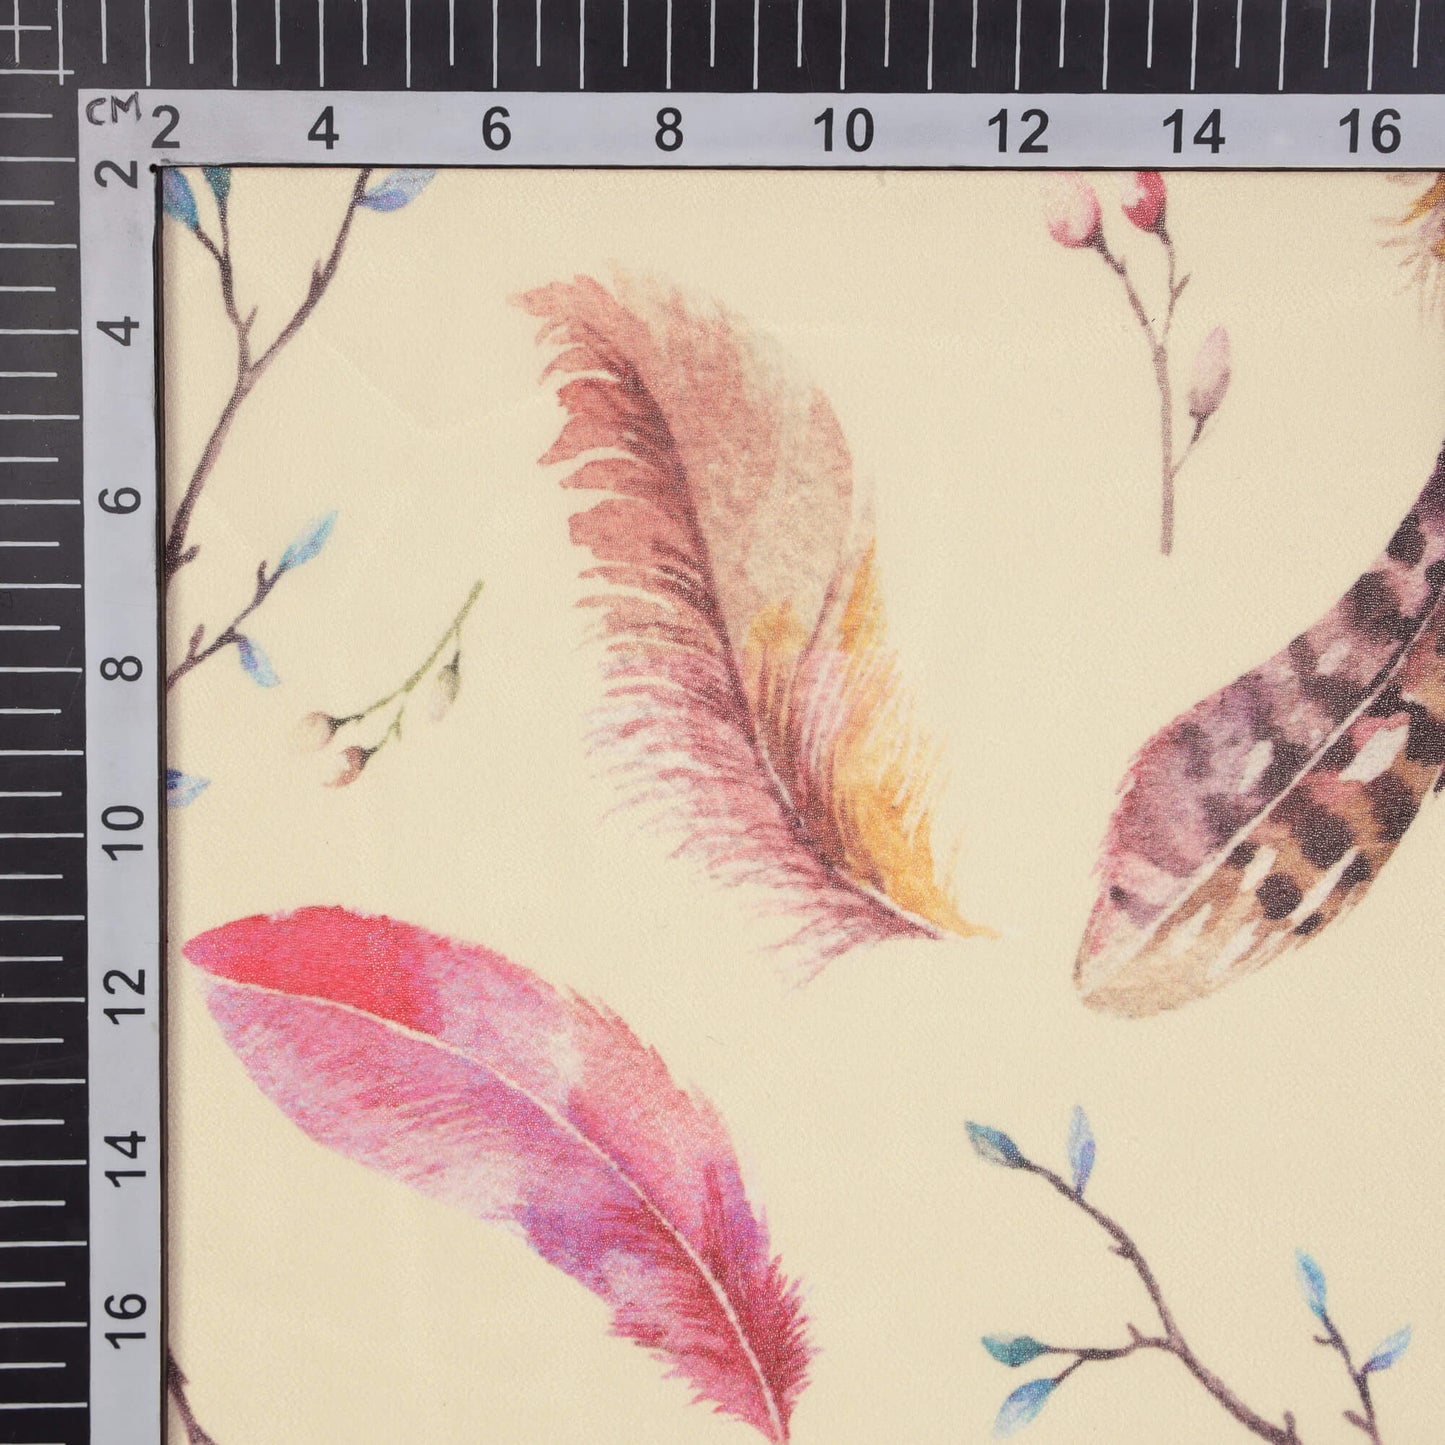 Multicolor Feather Digital Print Georgette Fabric